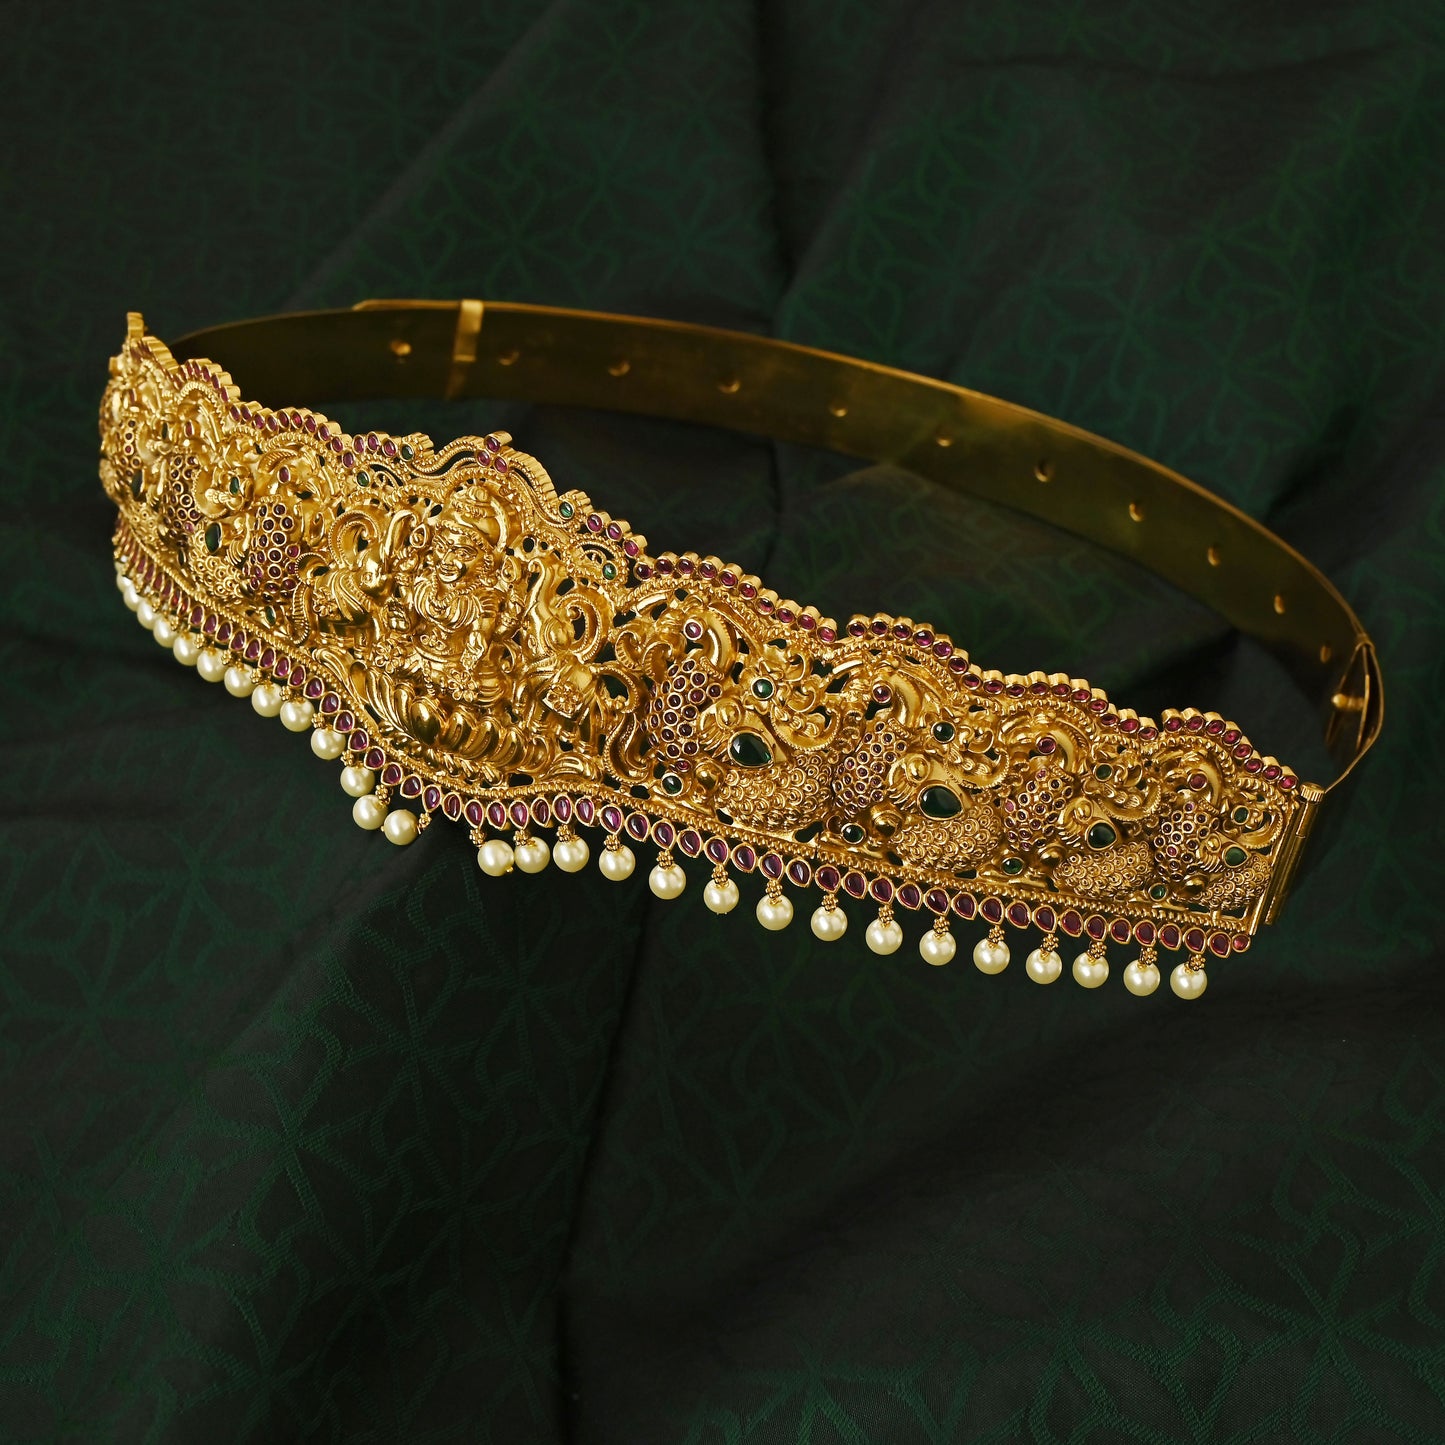 Aarna - Gorgeous Gold Look Heavy Temple Nagas Lakshmi Bridal Hip Belt for Weddings